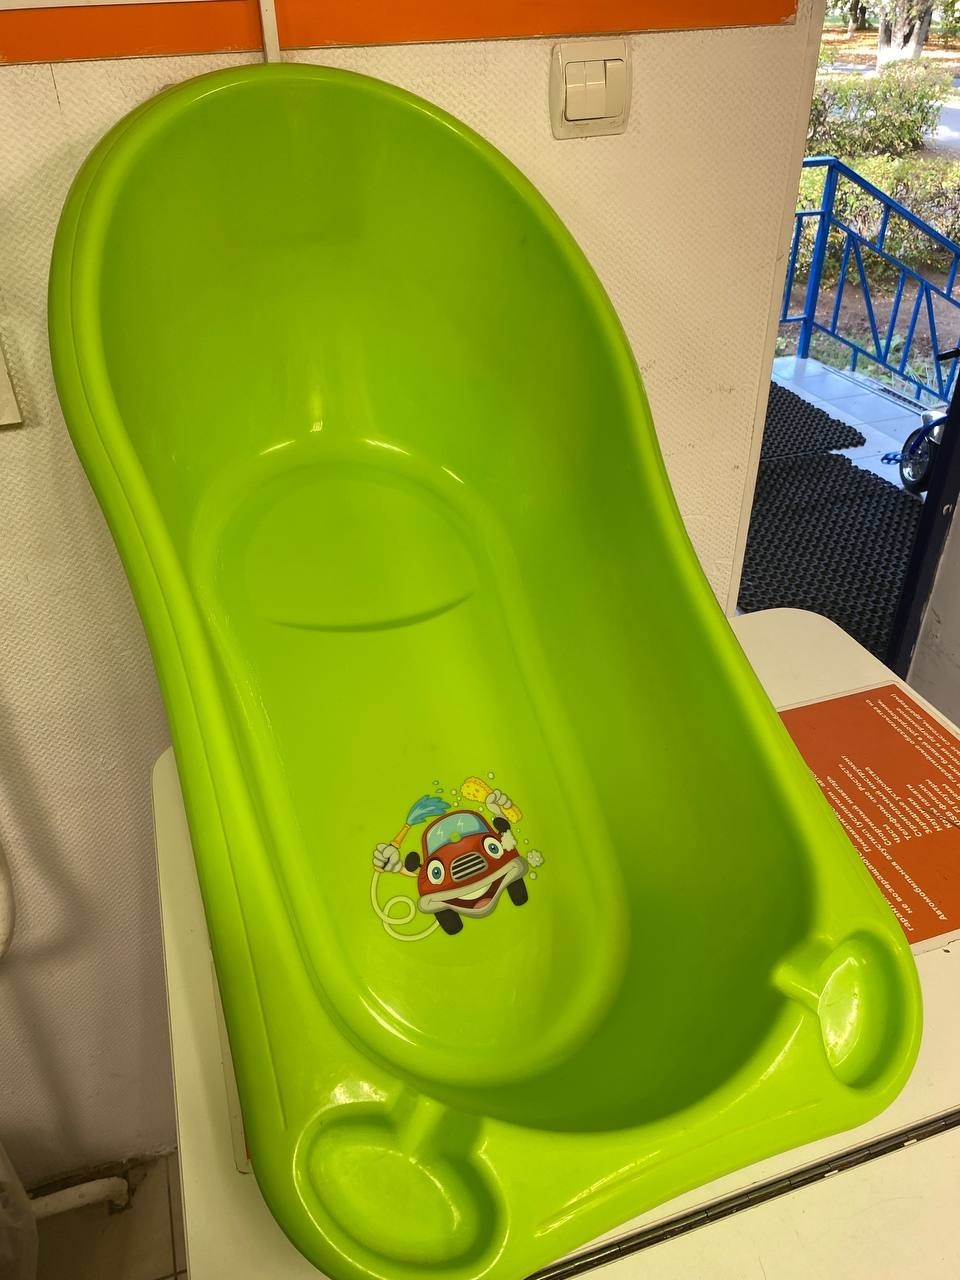 Ванночка для купания ребенка Dunya